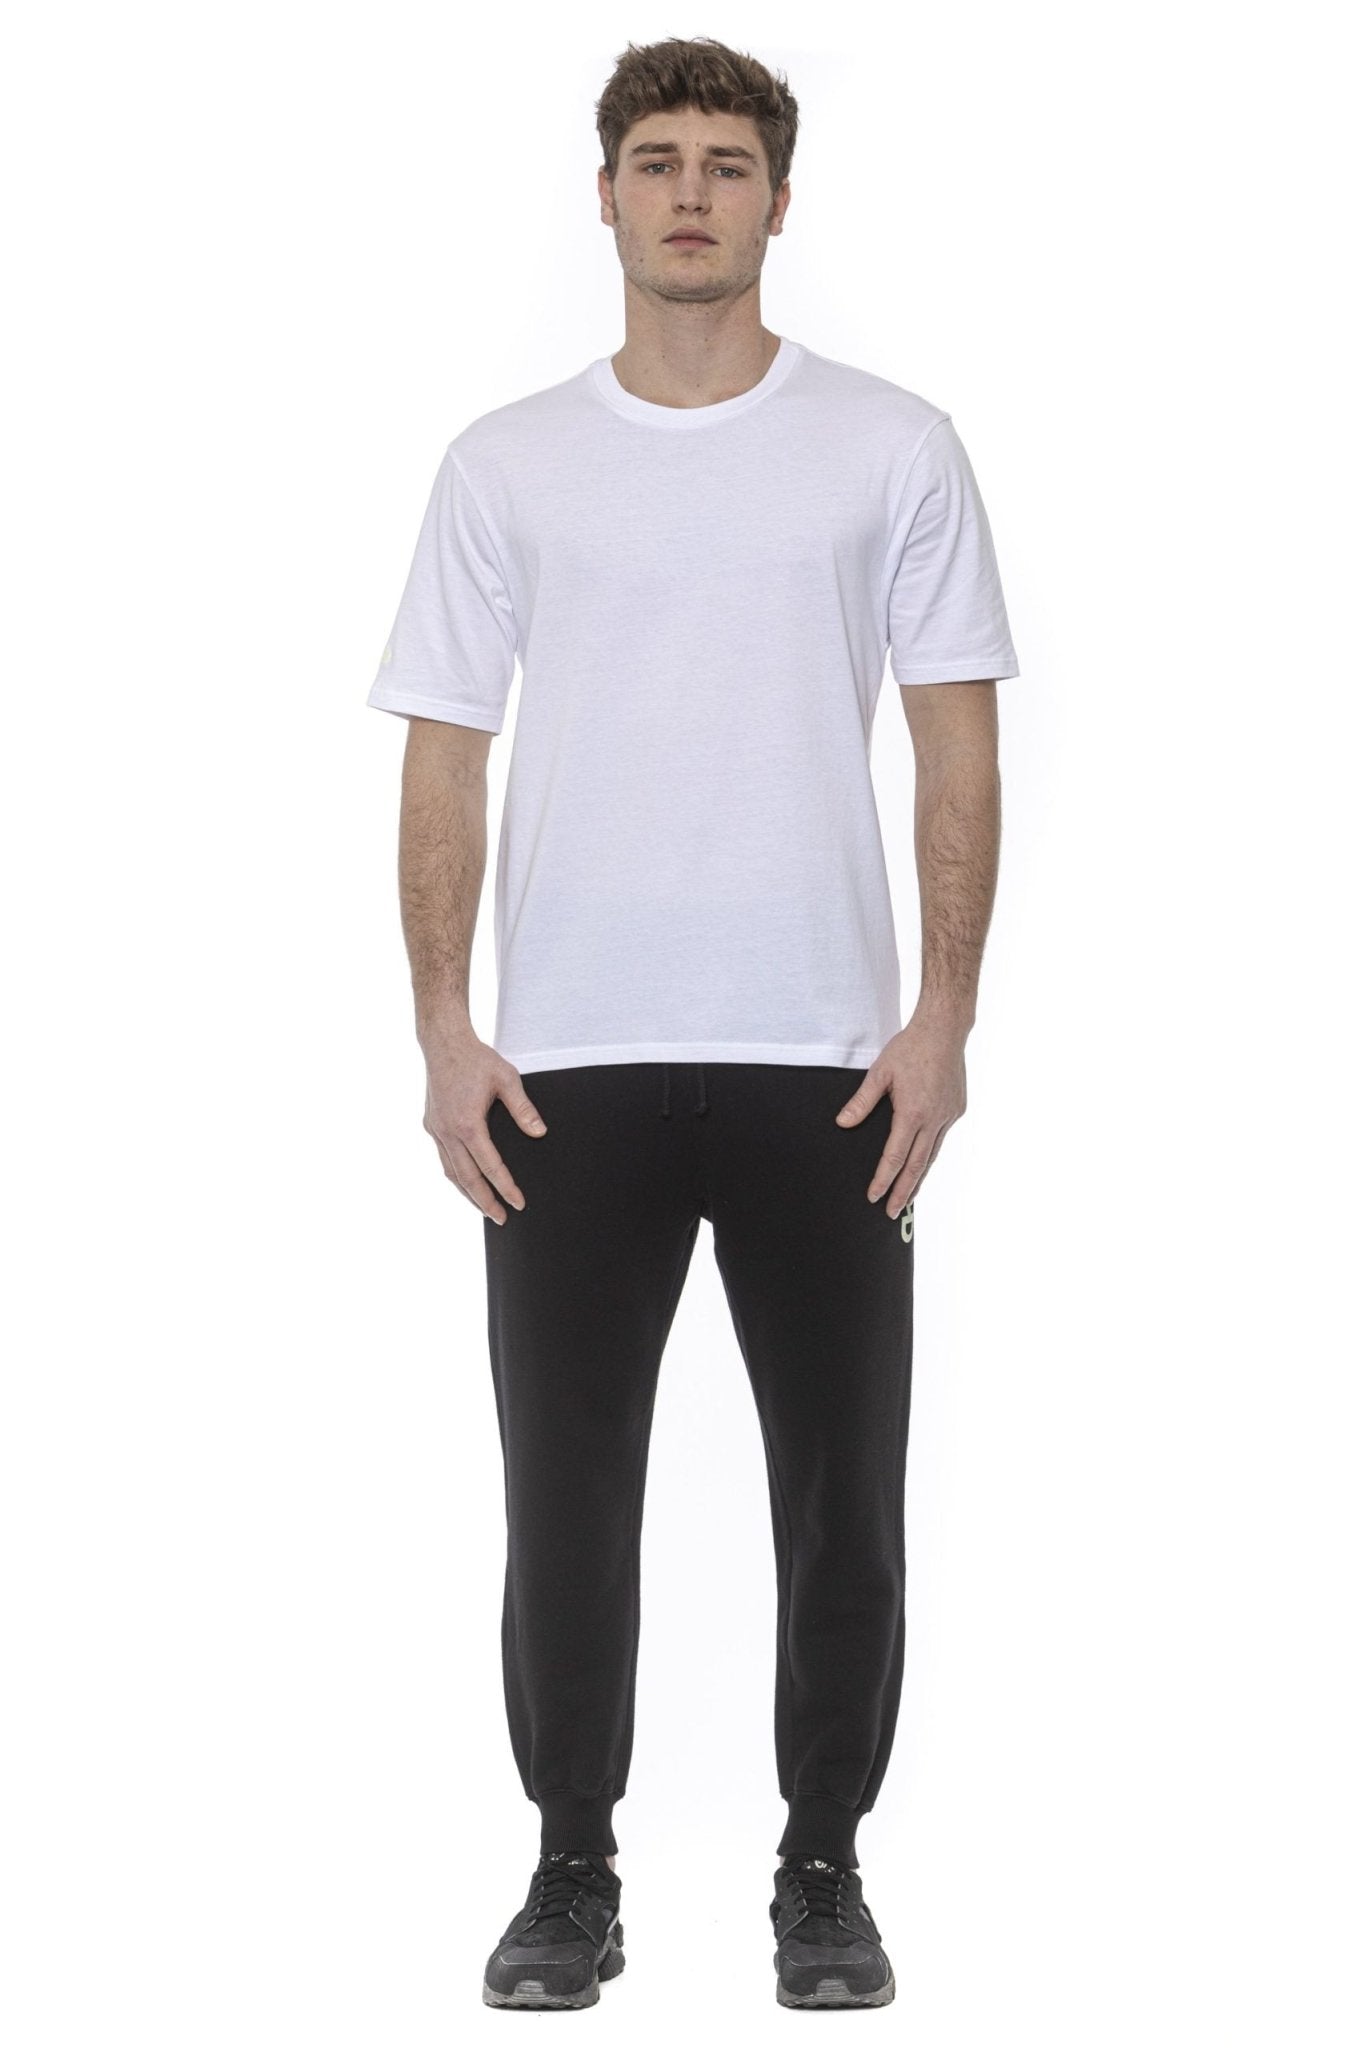 Tond White Cotton T-Shirt - Fizigo